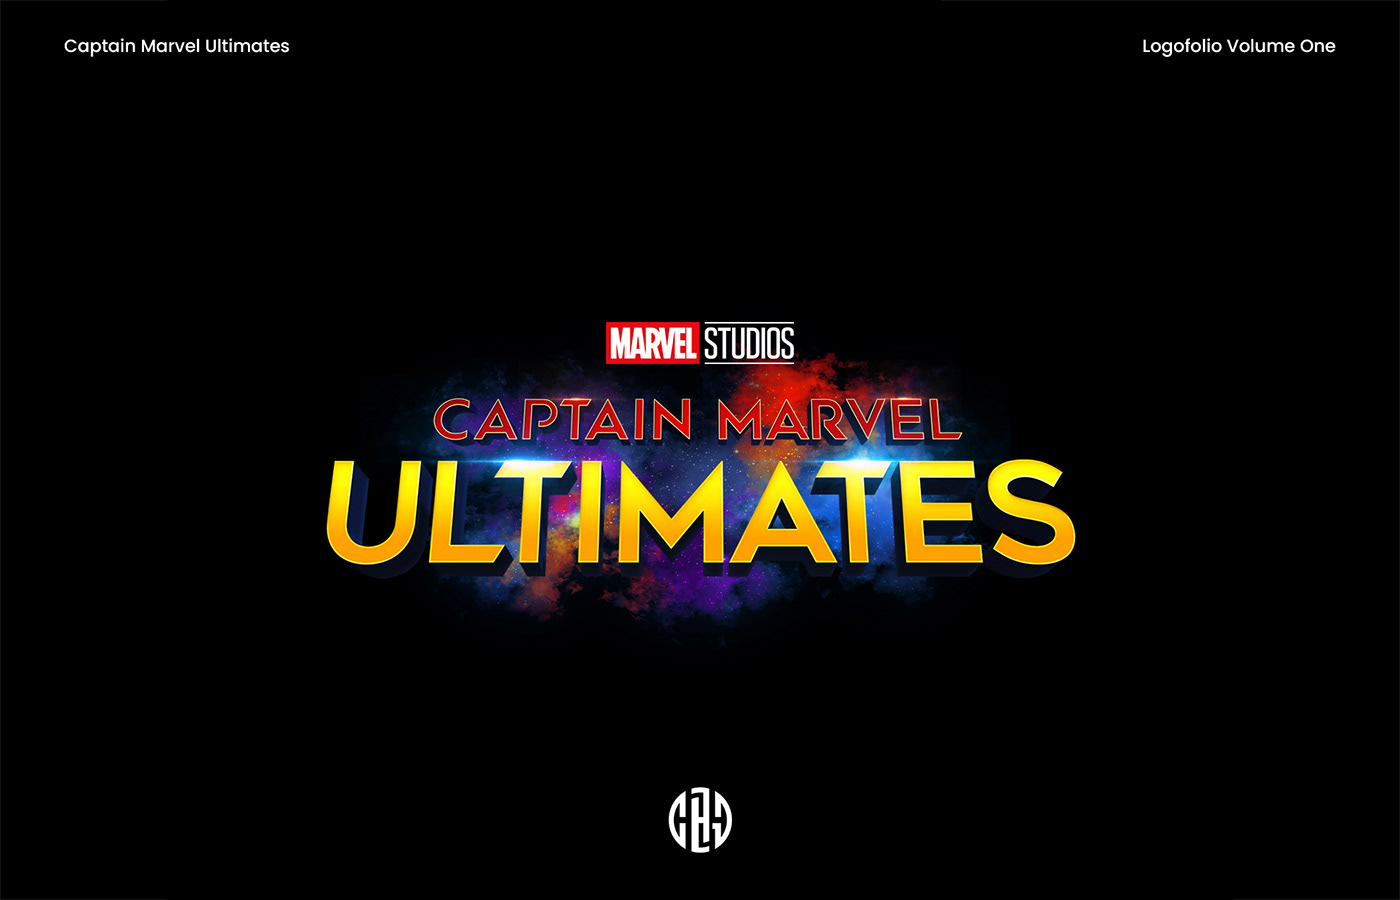 Avengers Captain Marvel iron man logo logofolio logos marvel Marvel Studies mcu spider-man